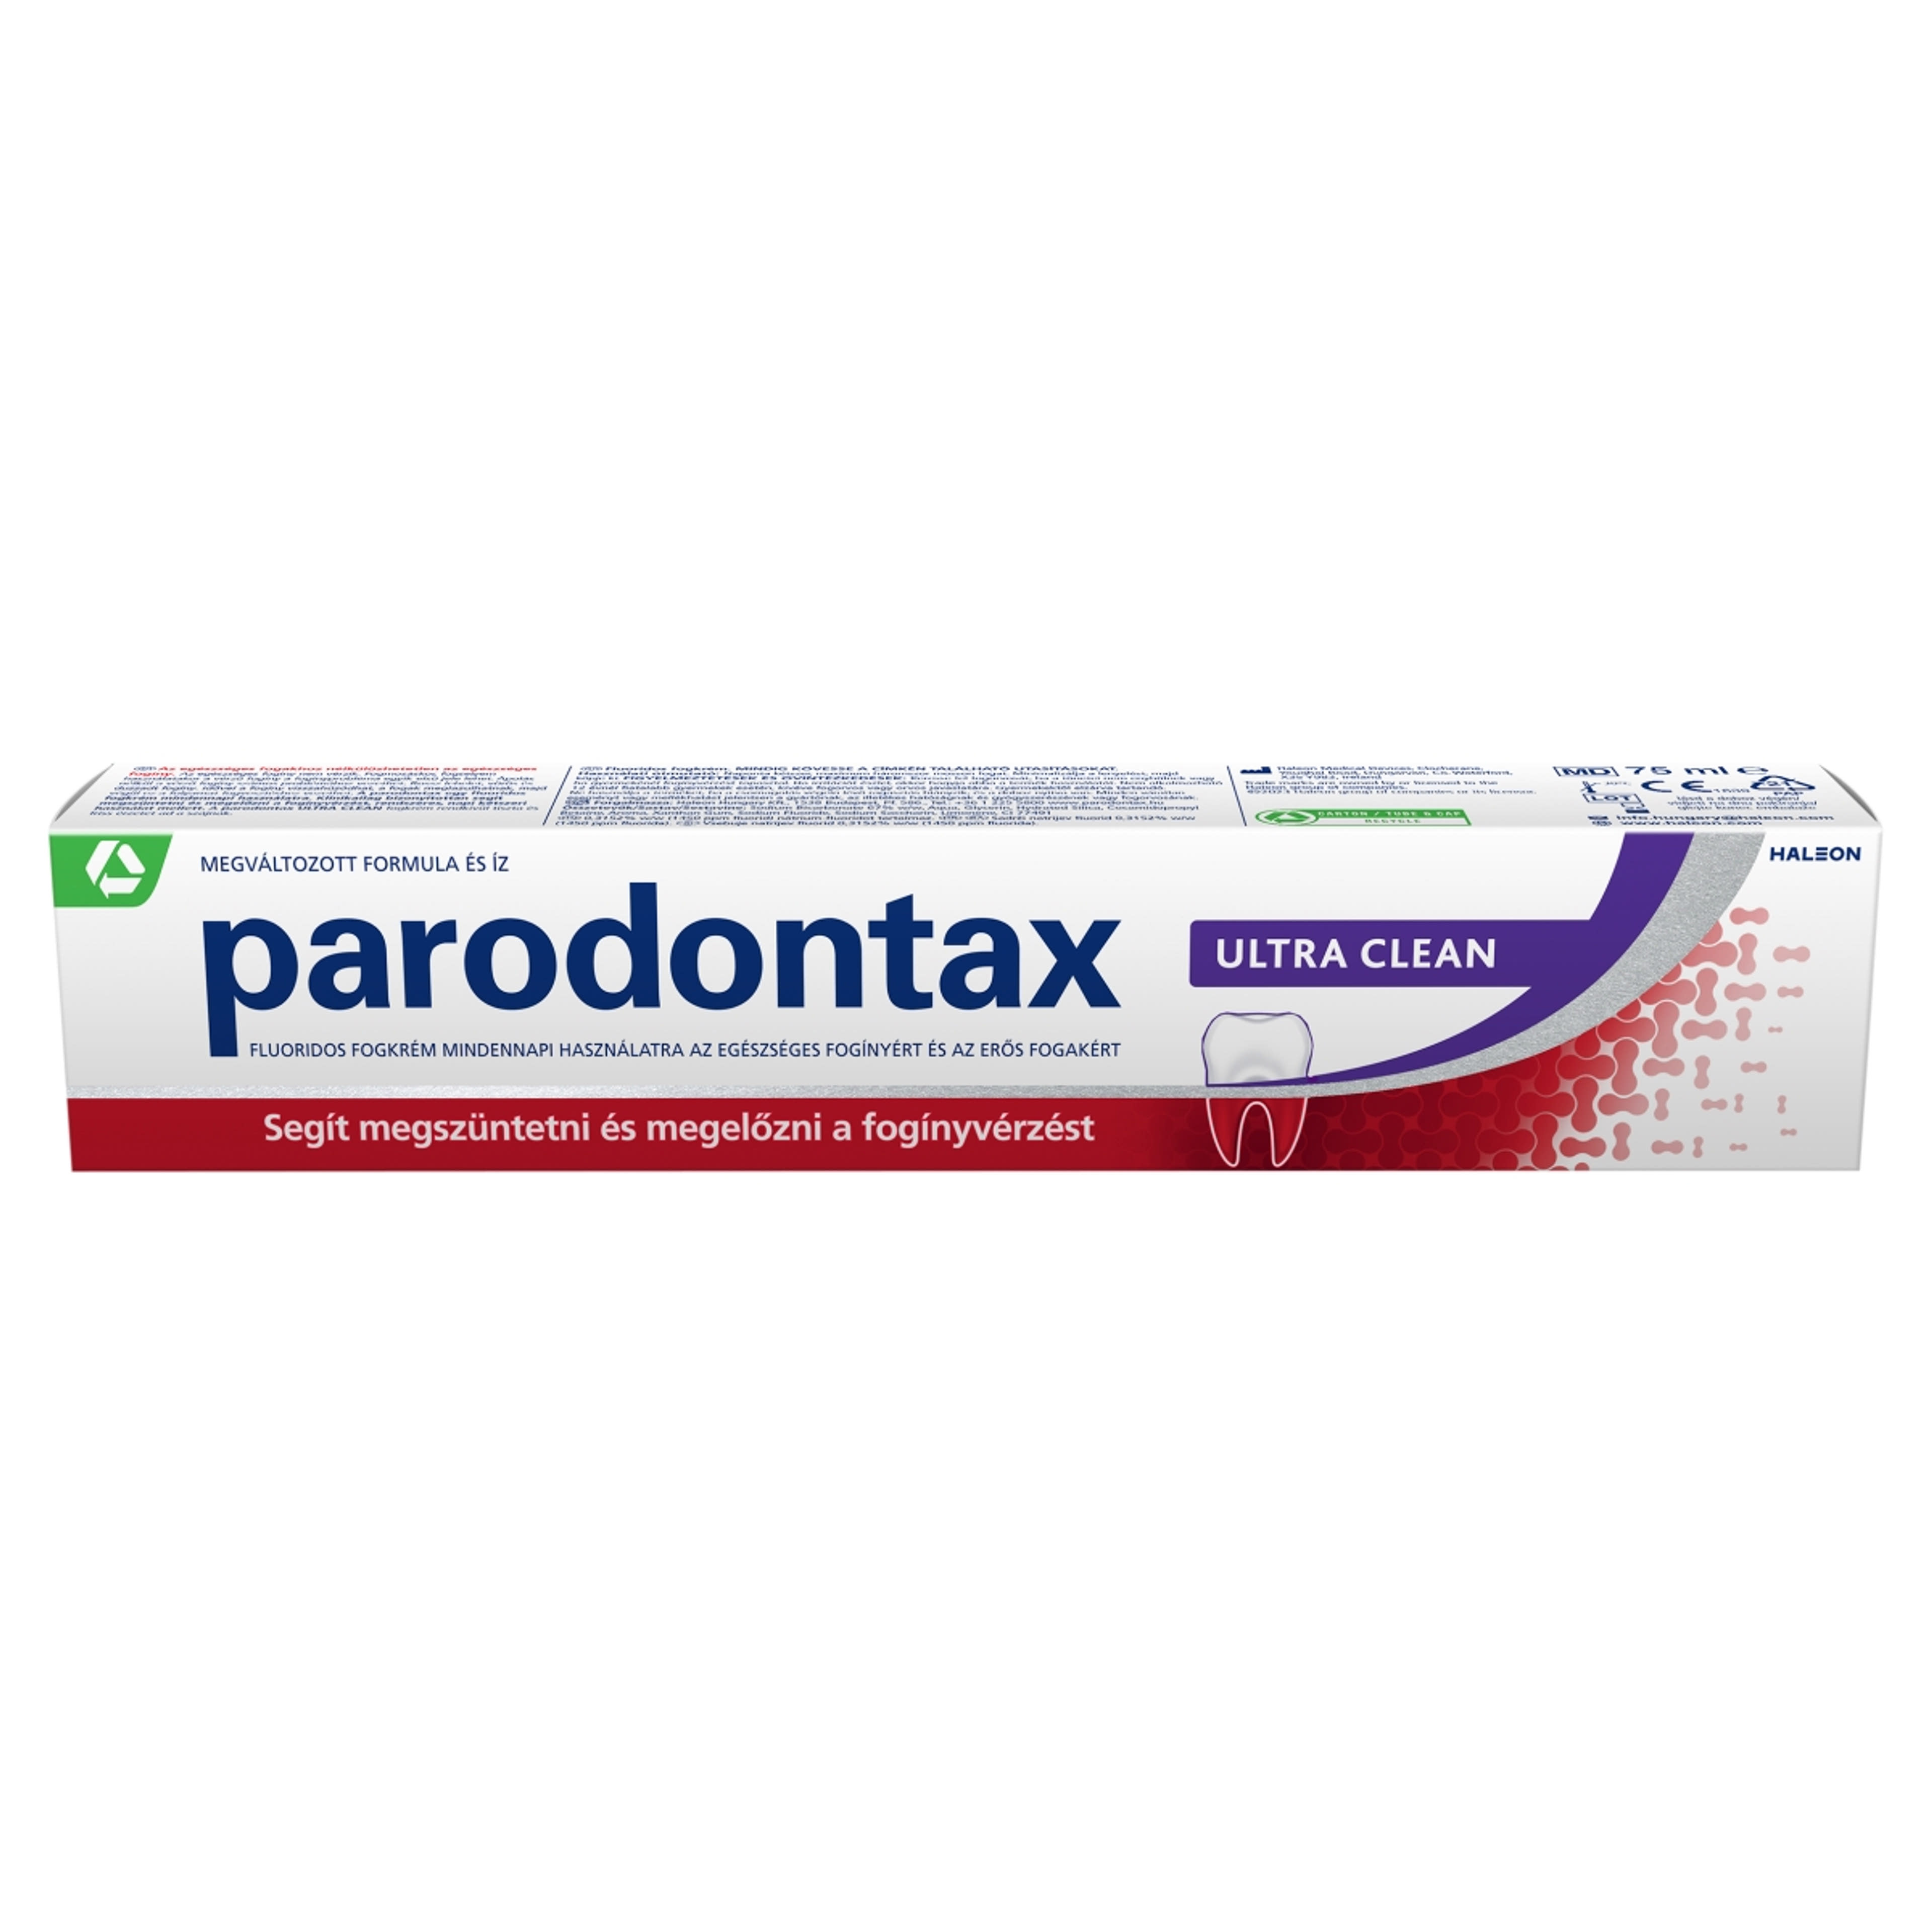 Parodontax Ultra Clean fogkrém - 75 ml